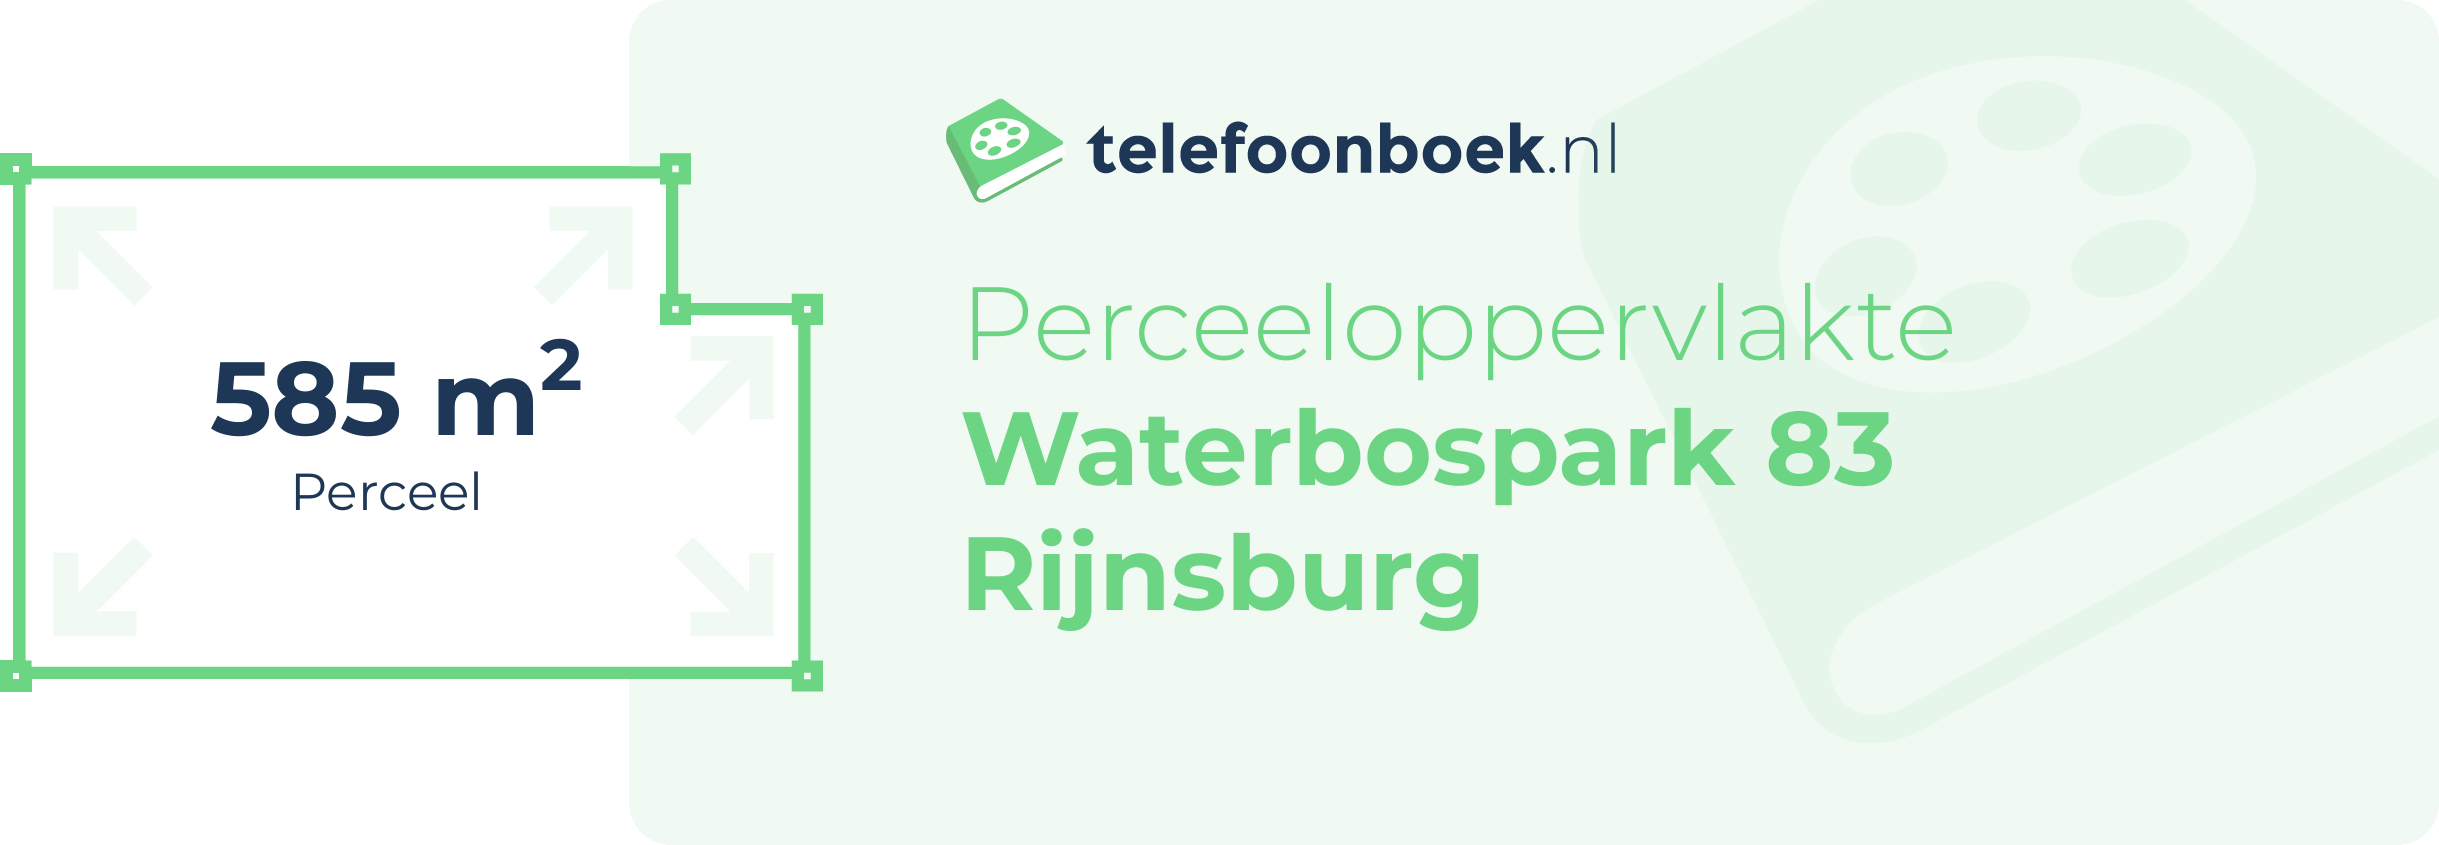 Perceeloppervlakte Waterbospark 83 Rijnsburg